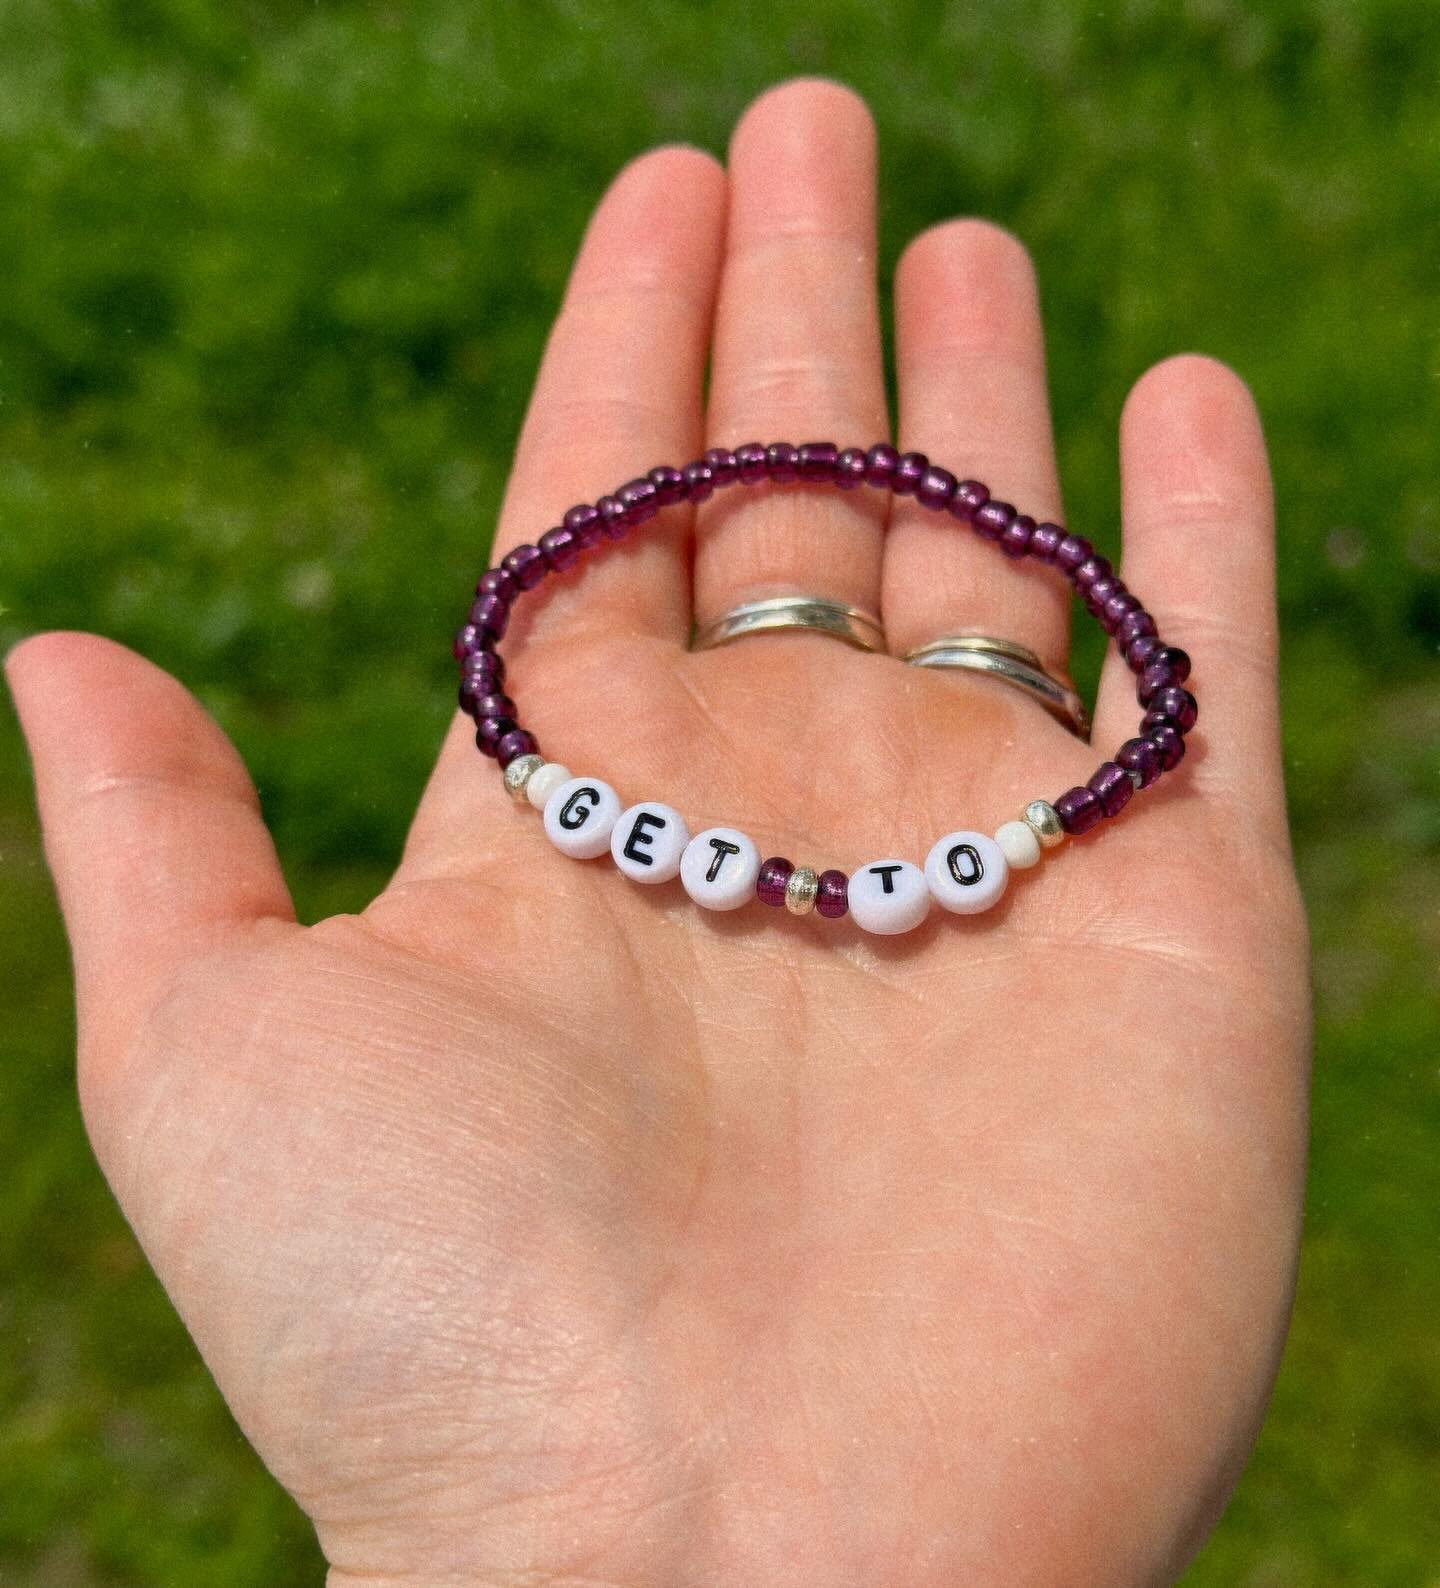 Pretty purple 💜🦄👾🍇☮️🪻
I love making custom bracelets.